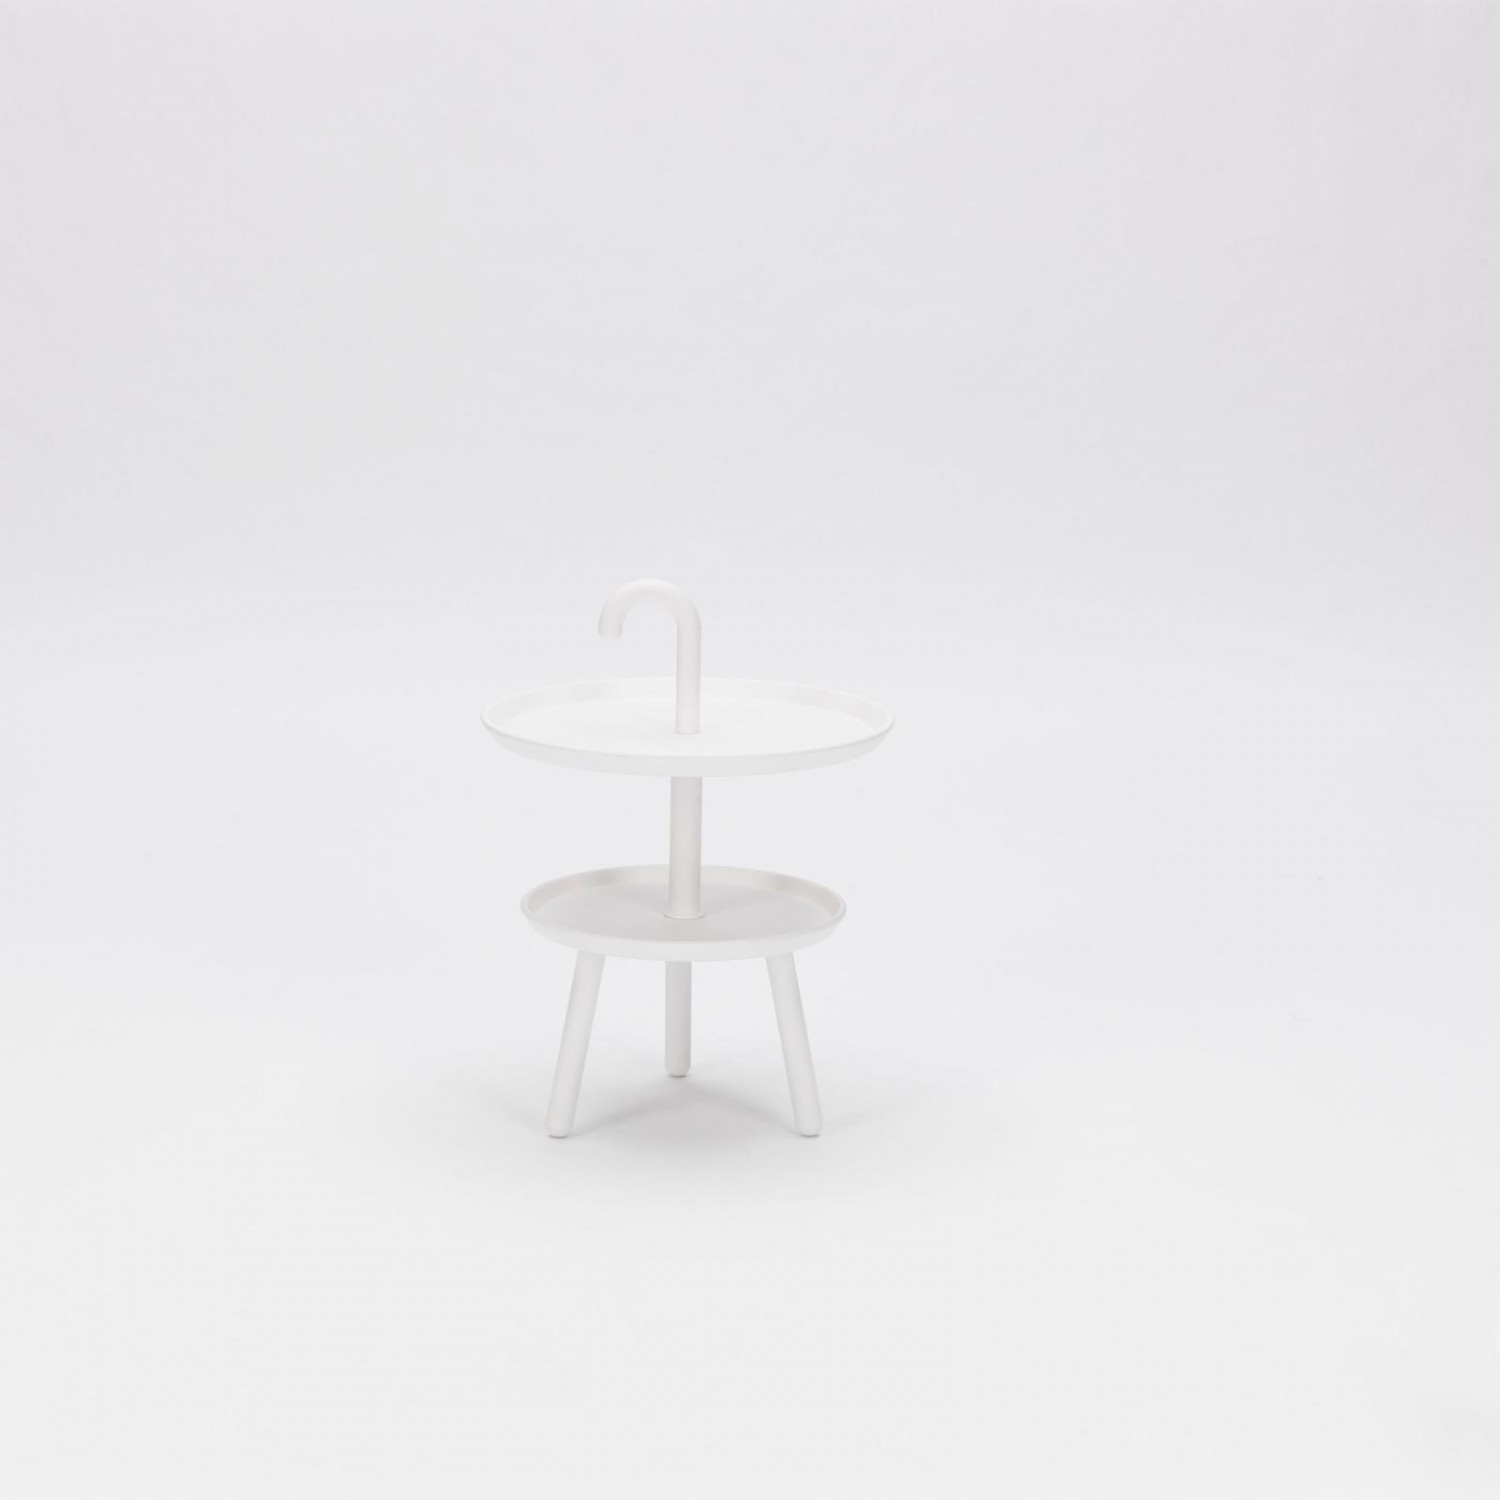 tavolino da esterno (Ø.41 x 55 h cm) design twist sunny